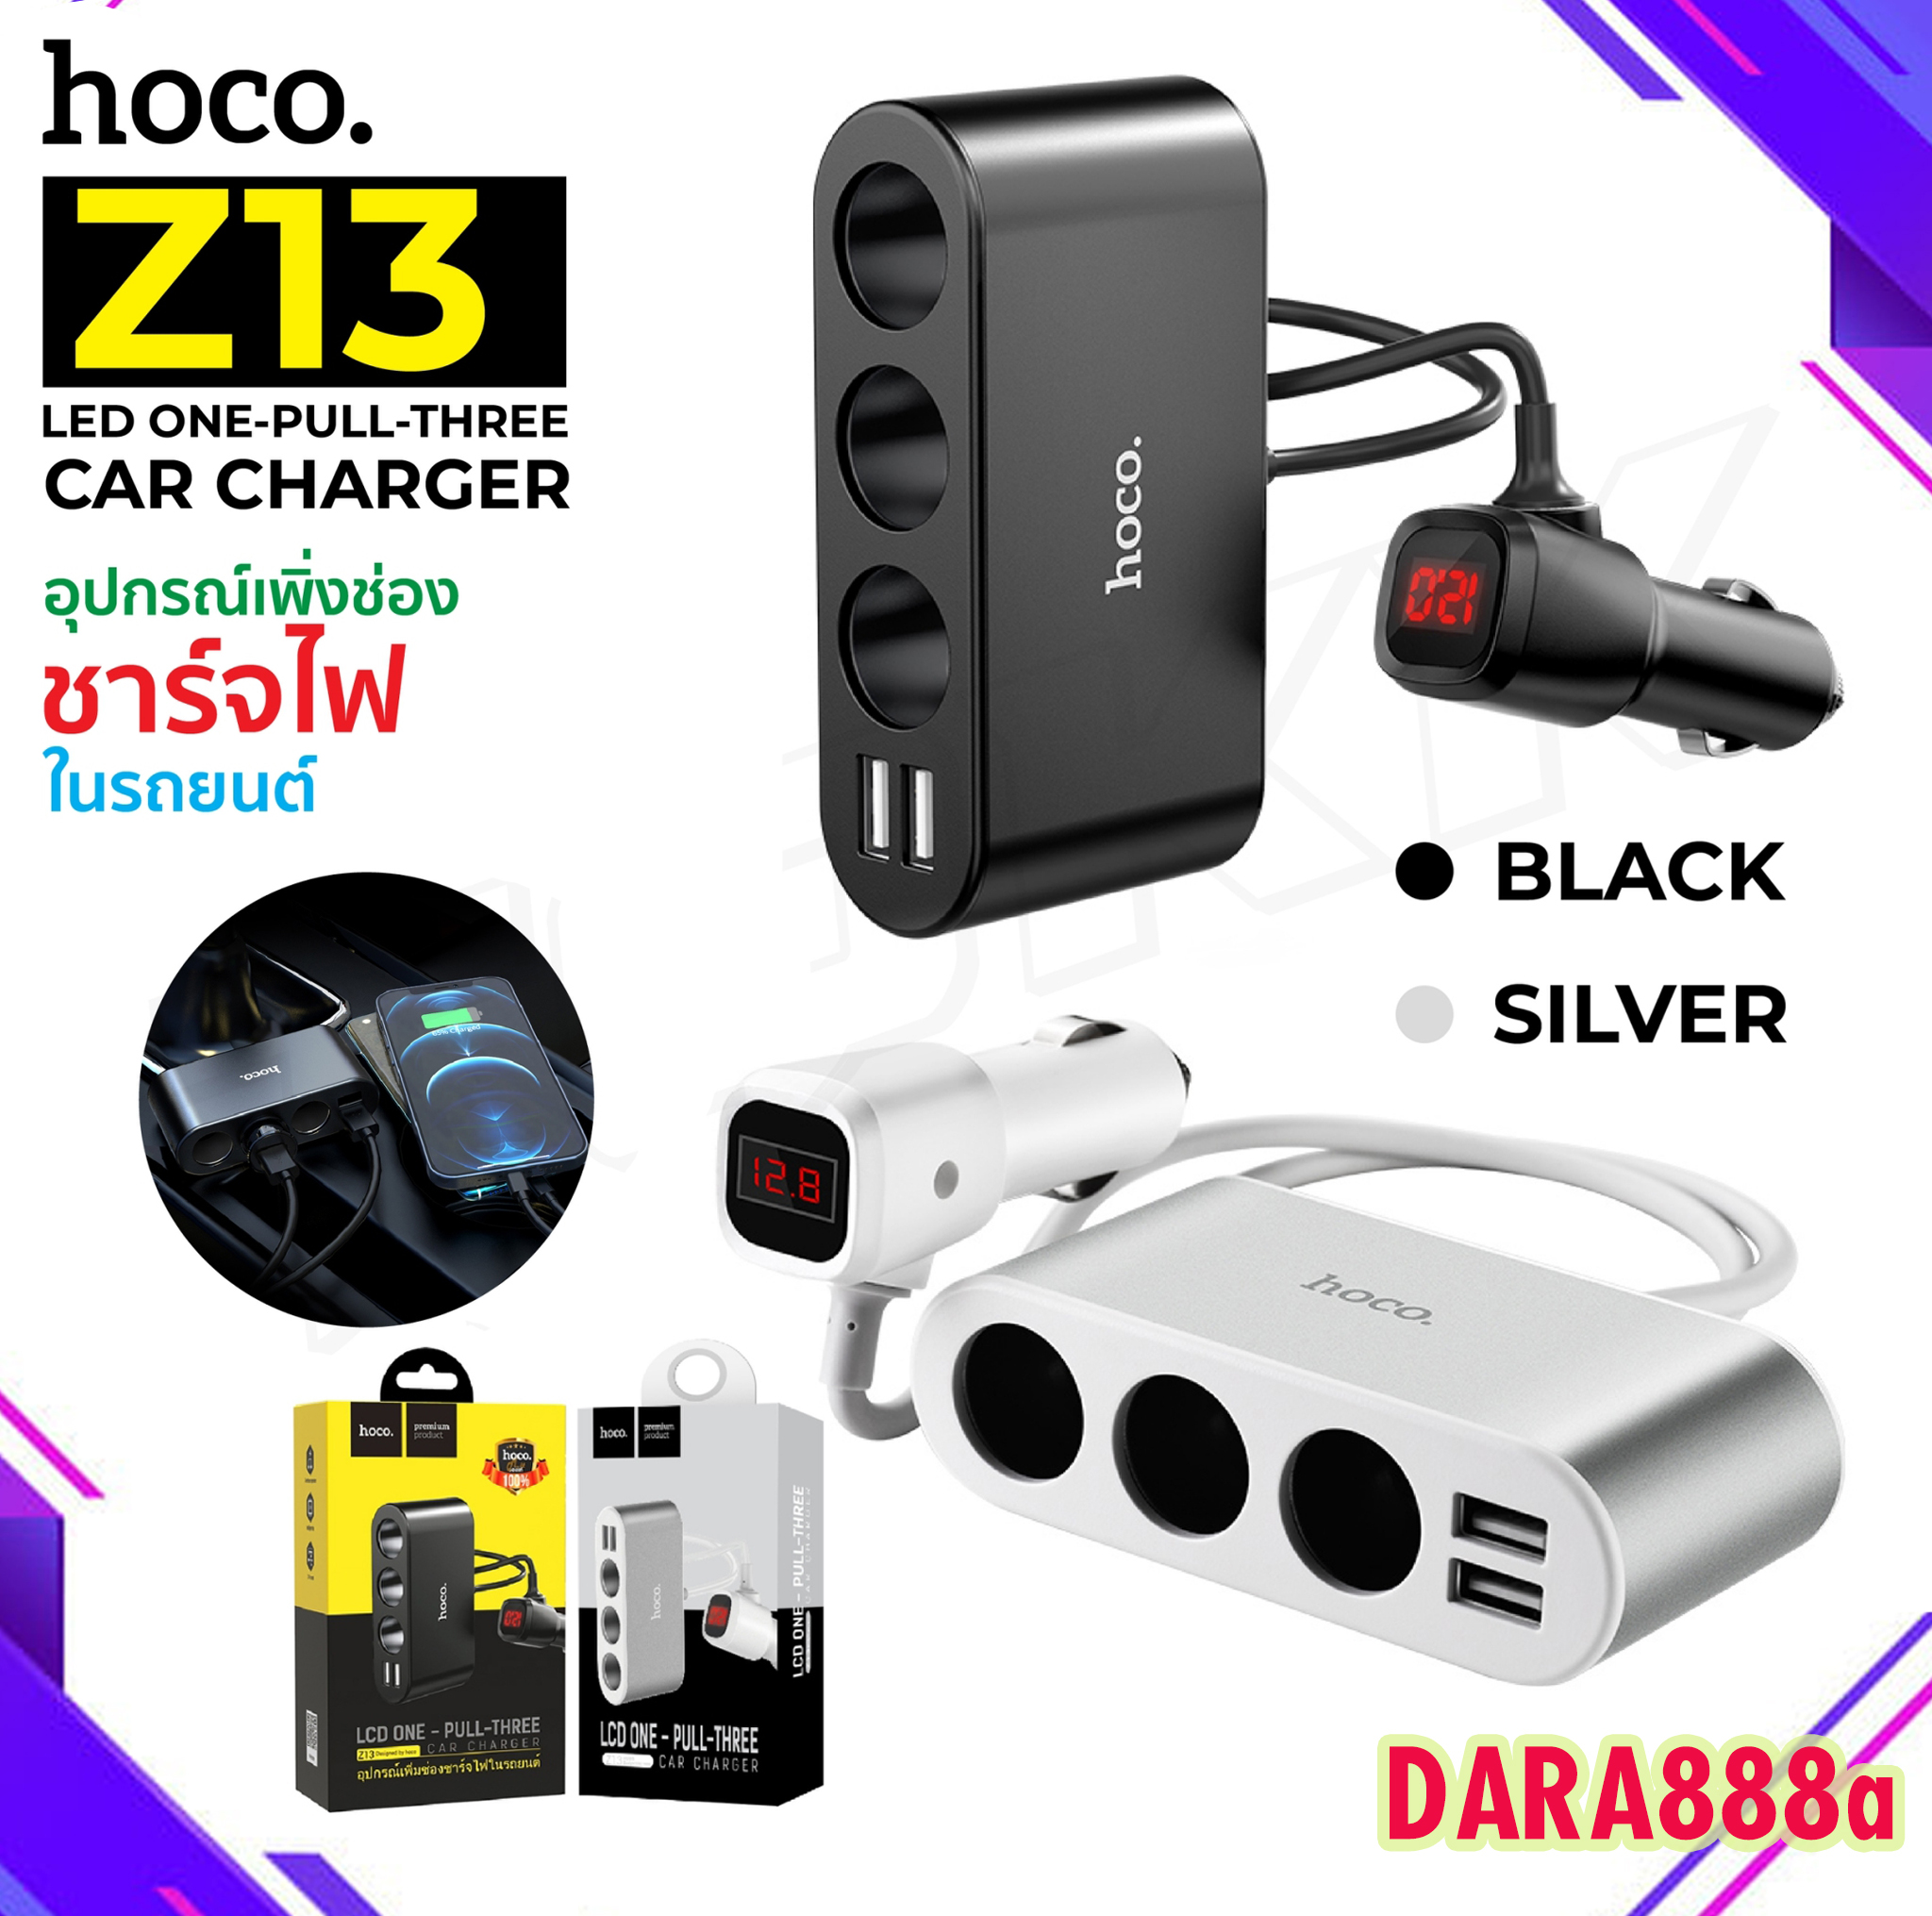 Hoco. Z13 Adapter หัวชาร์จในรถยนต์แบบ 2 USB 3 ช่องเสียบ 12V Output 2.4A ยาว 55 cm dara888a